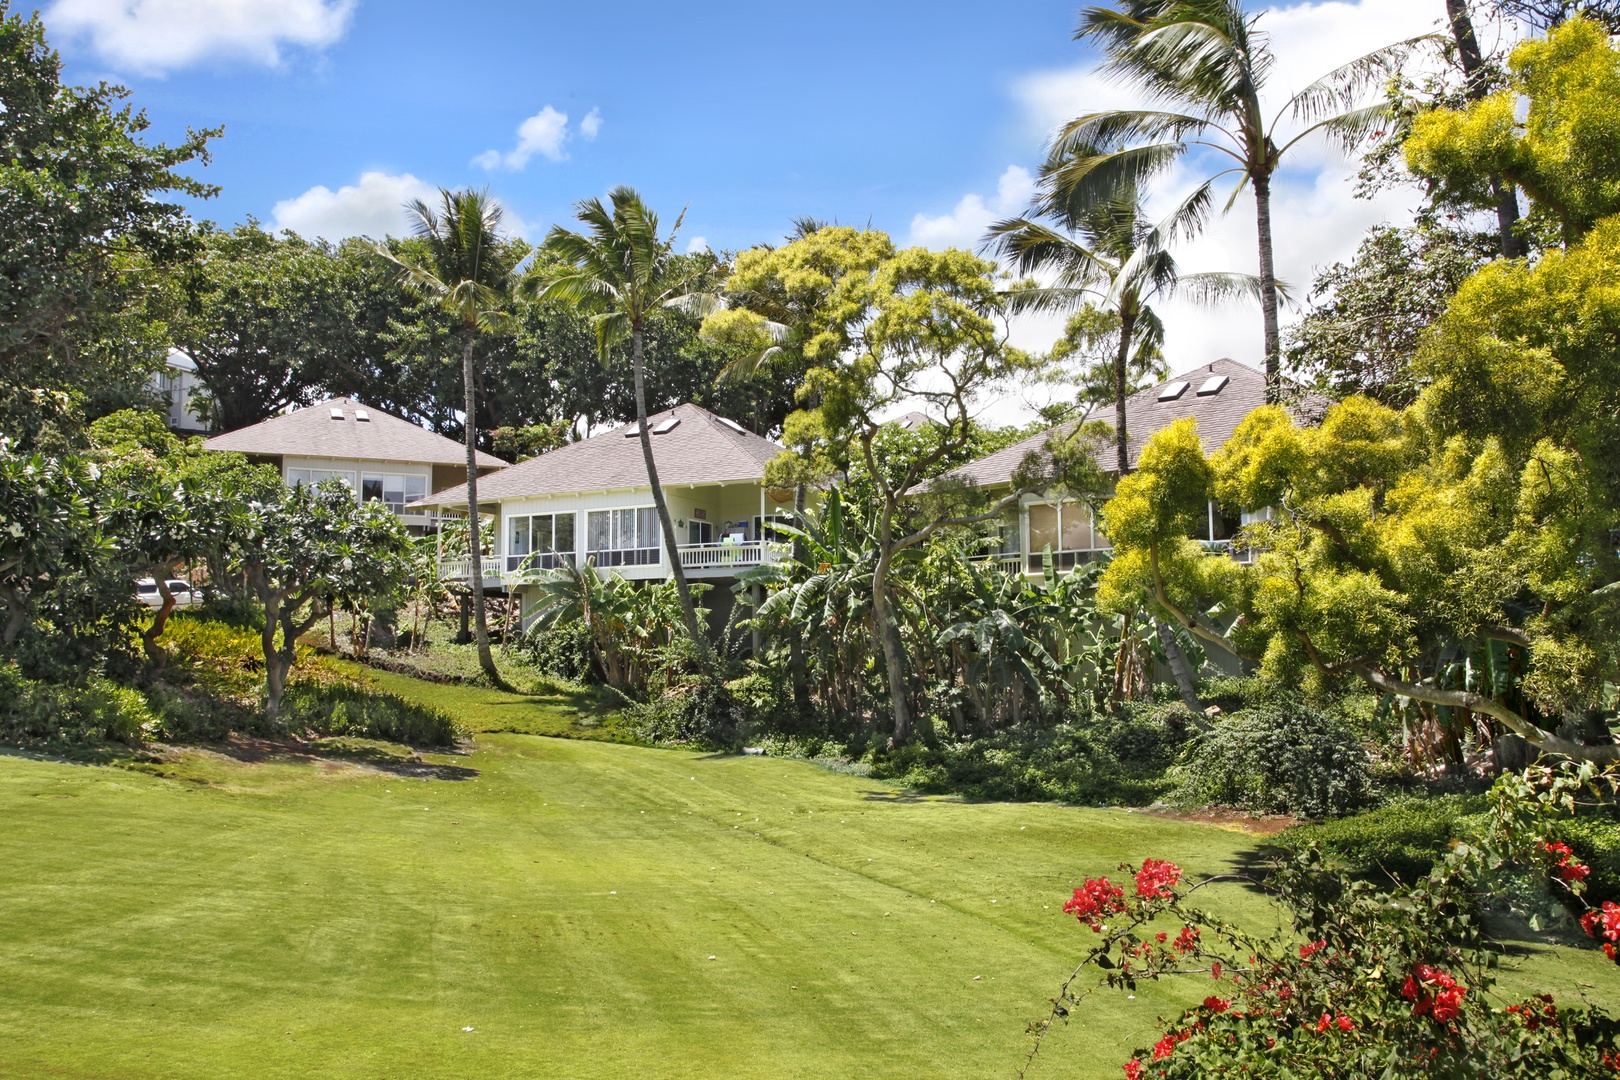 Koloa Vacation Rentals, Kauai Birdsong at Poipu Crater - Enjoy the lush green garden while strolling in the morning.